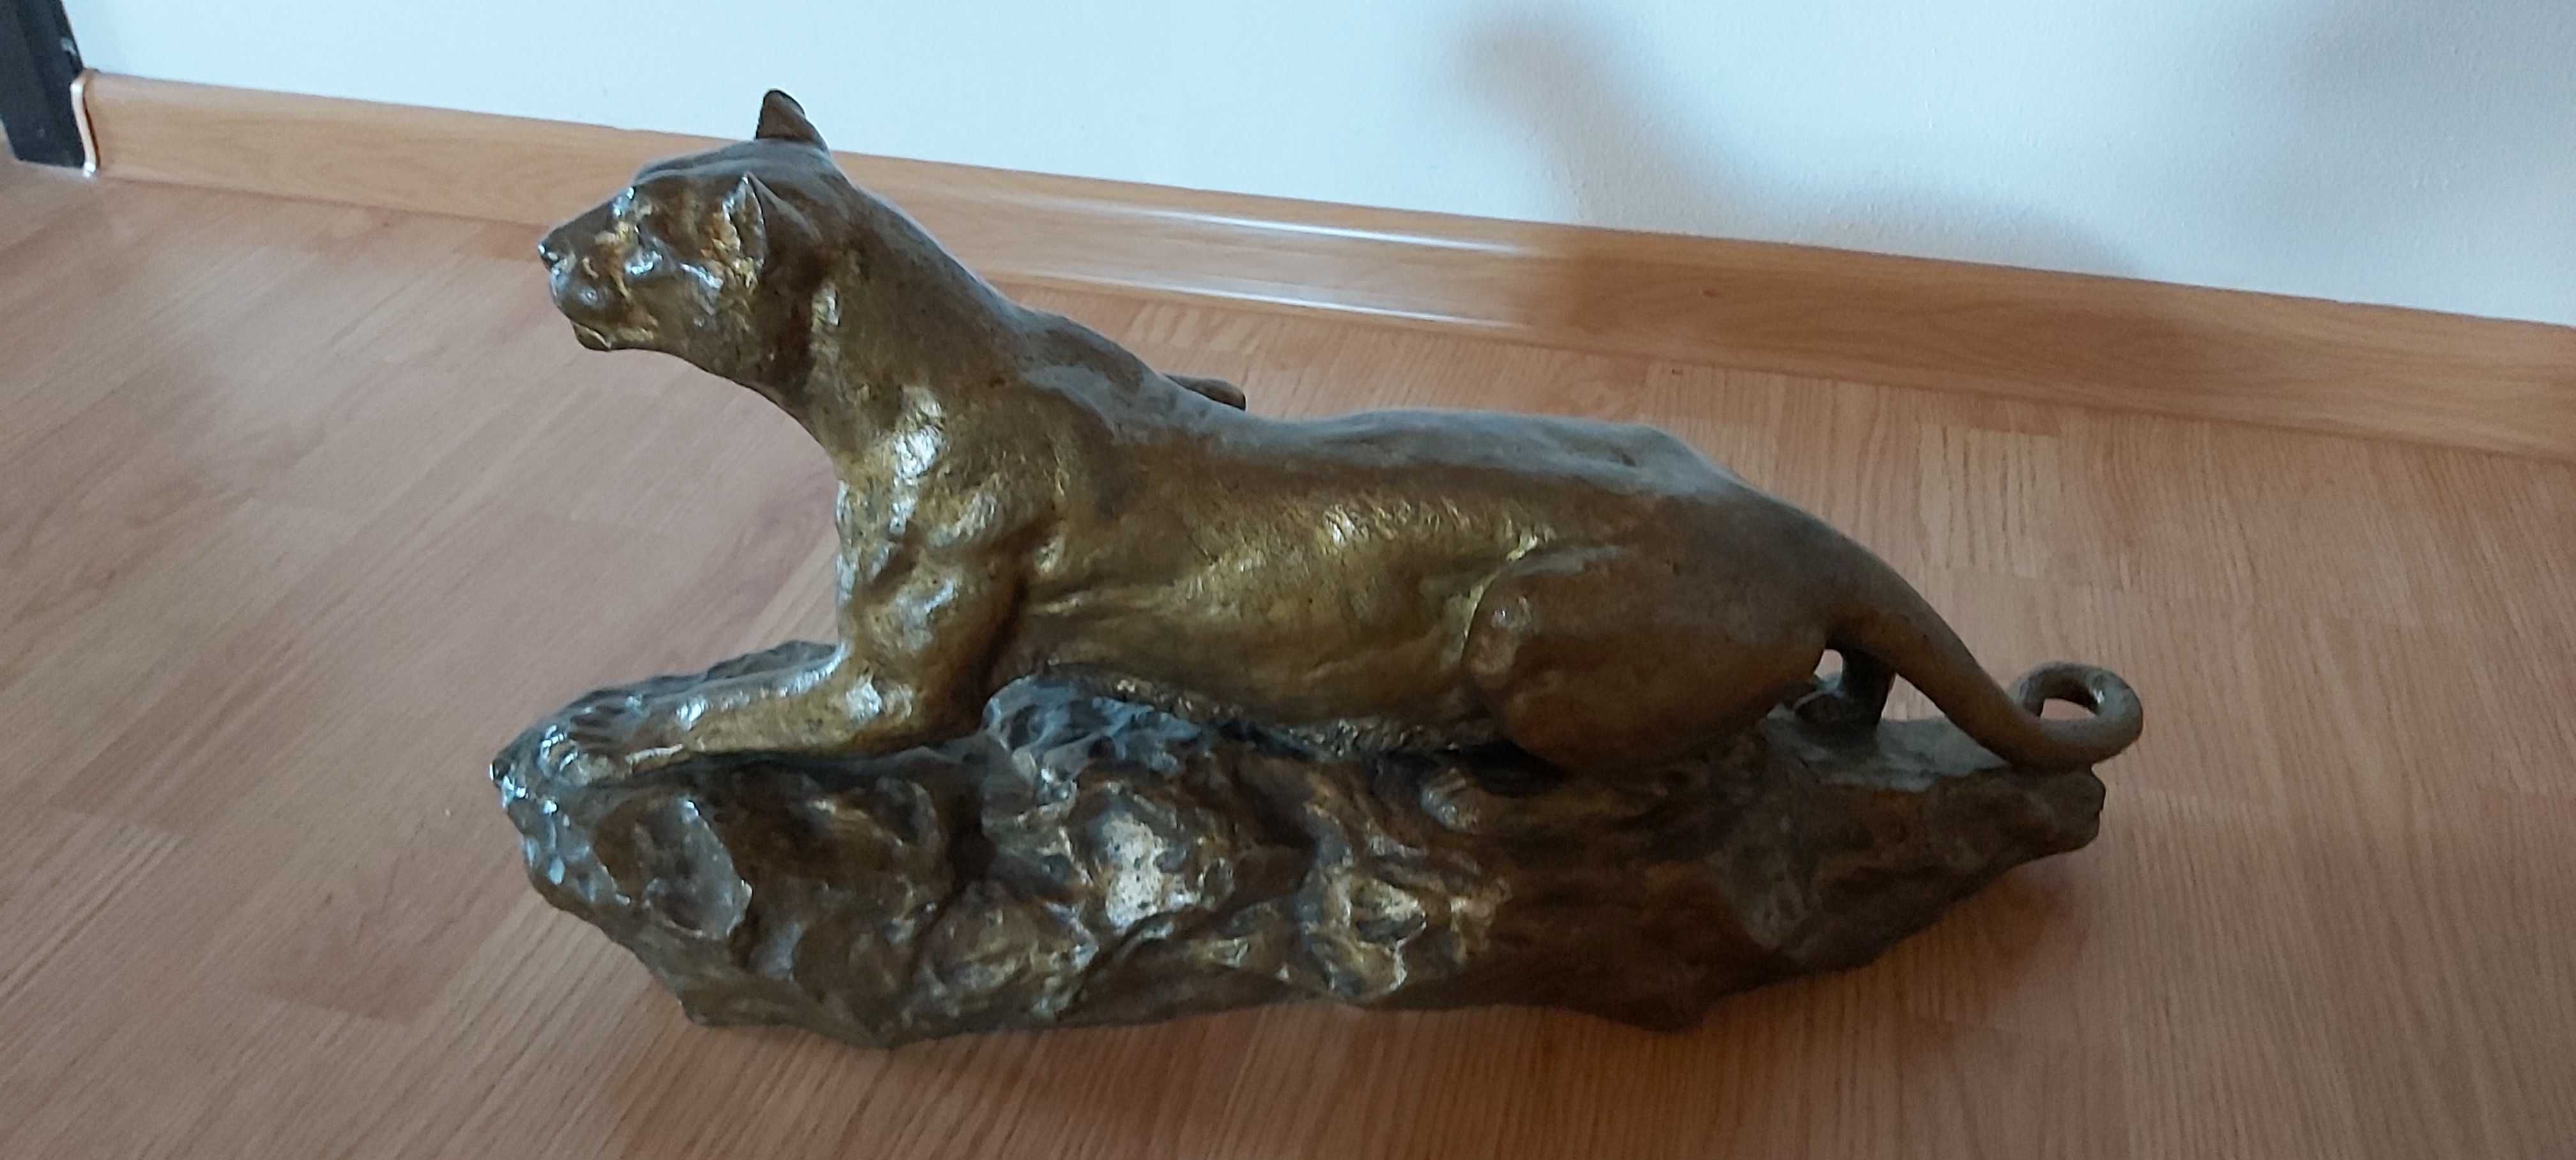 Vand statueta originala: leoaica, sculptura in bronz, autor h. peyrol